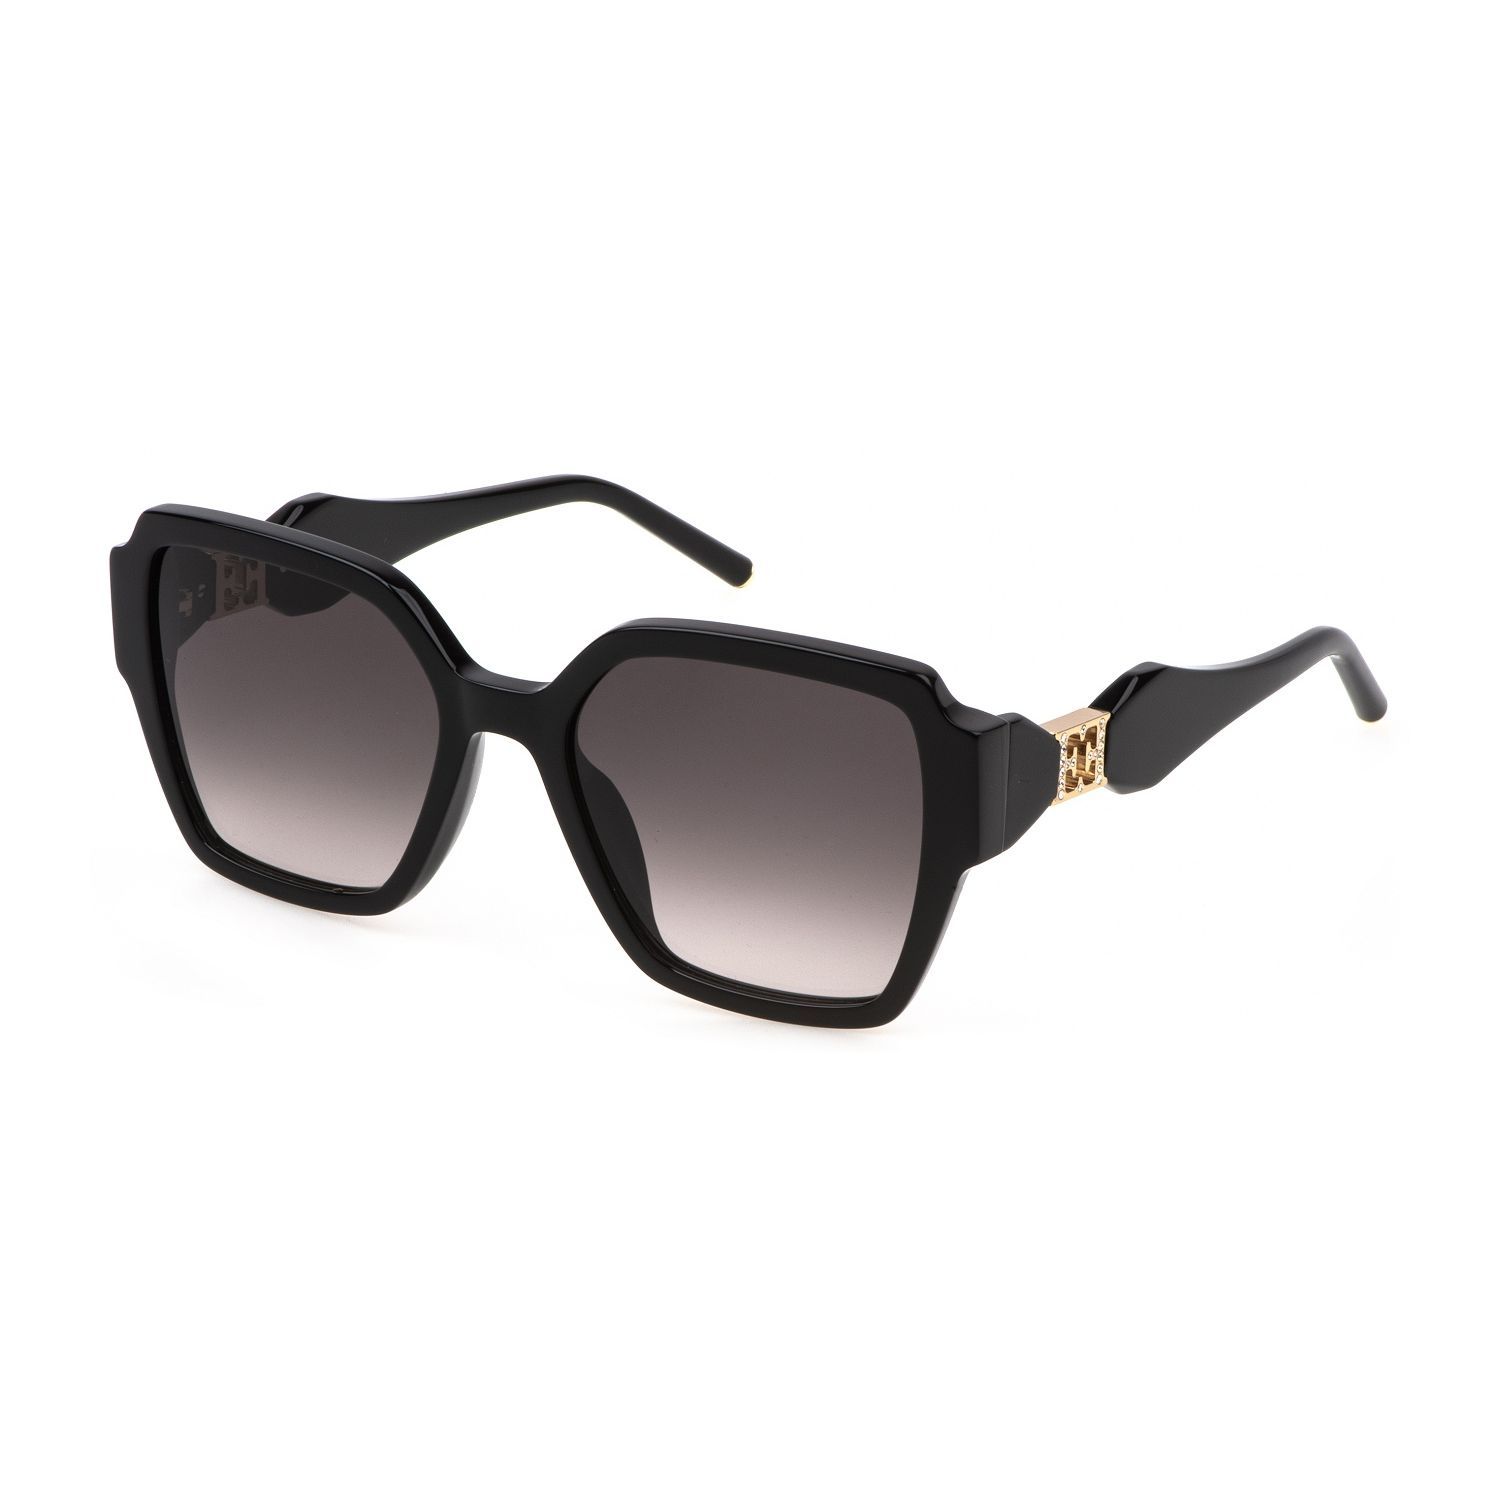 SESE48S Square Sunglasses 0700 - size 54